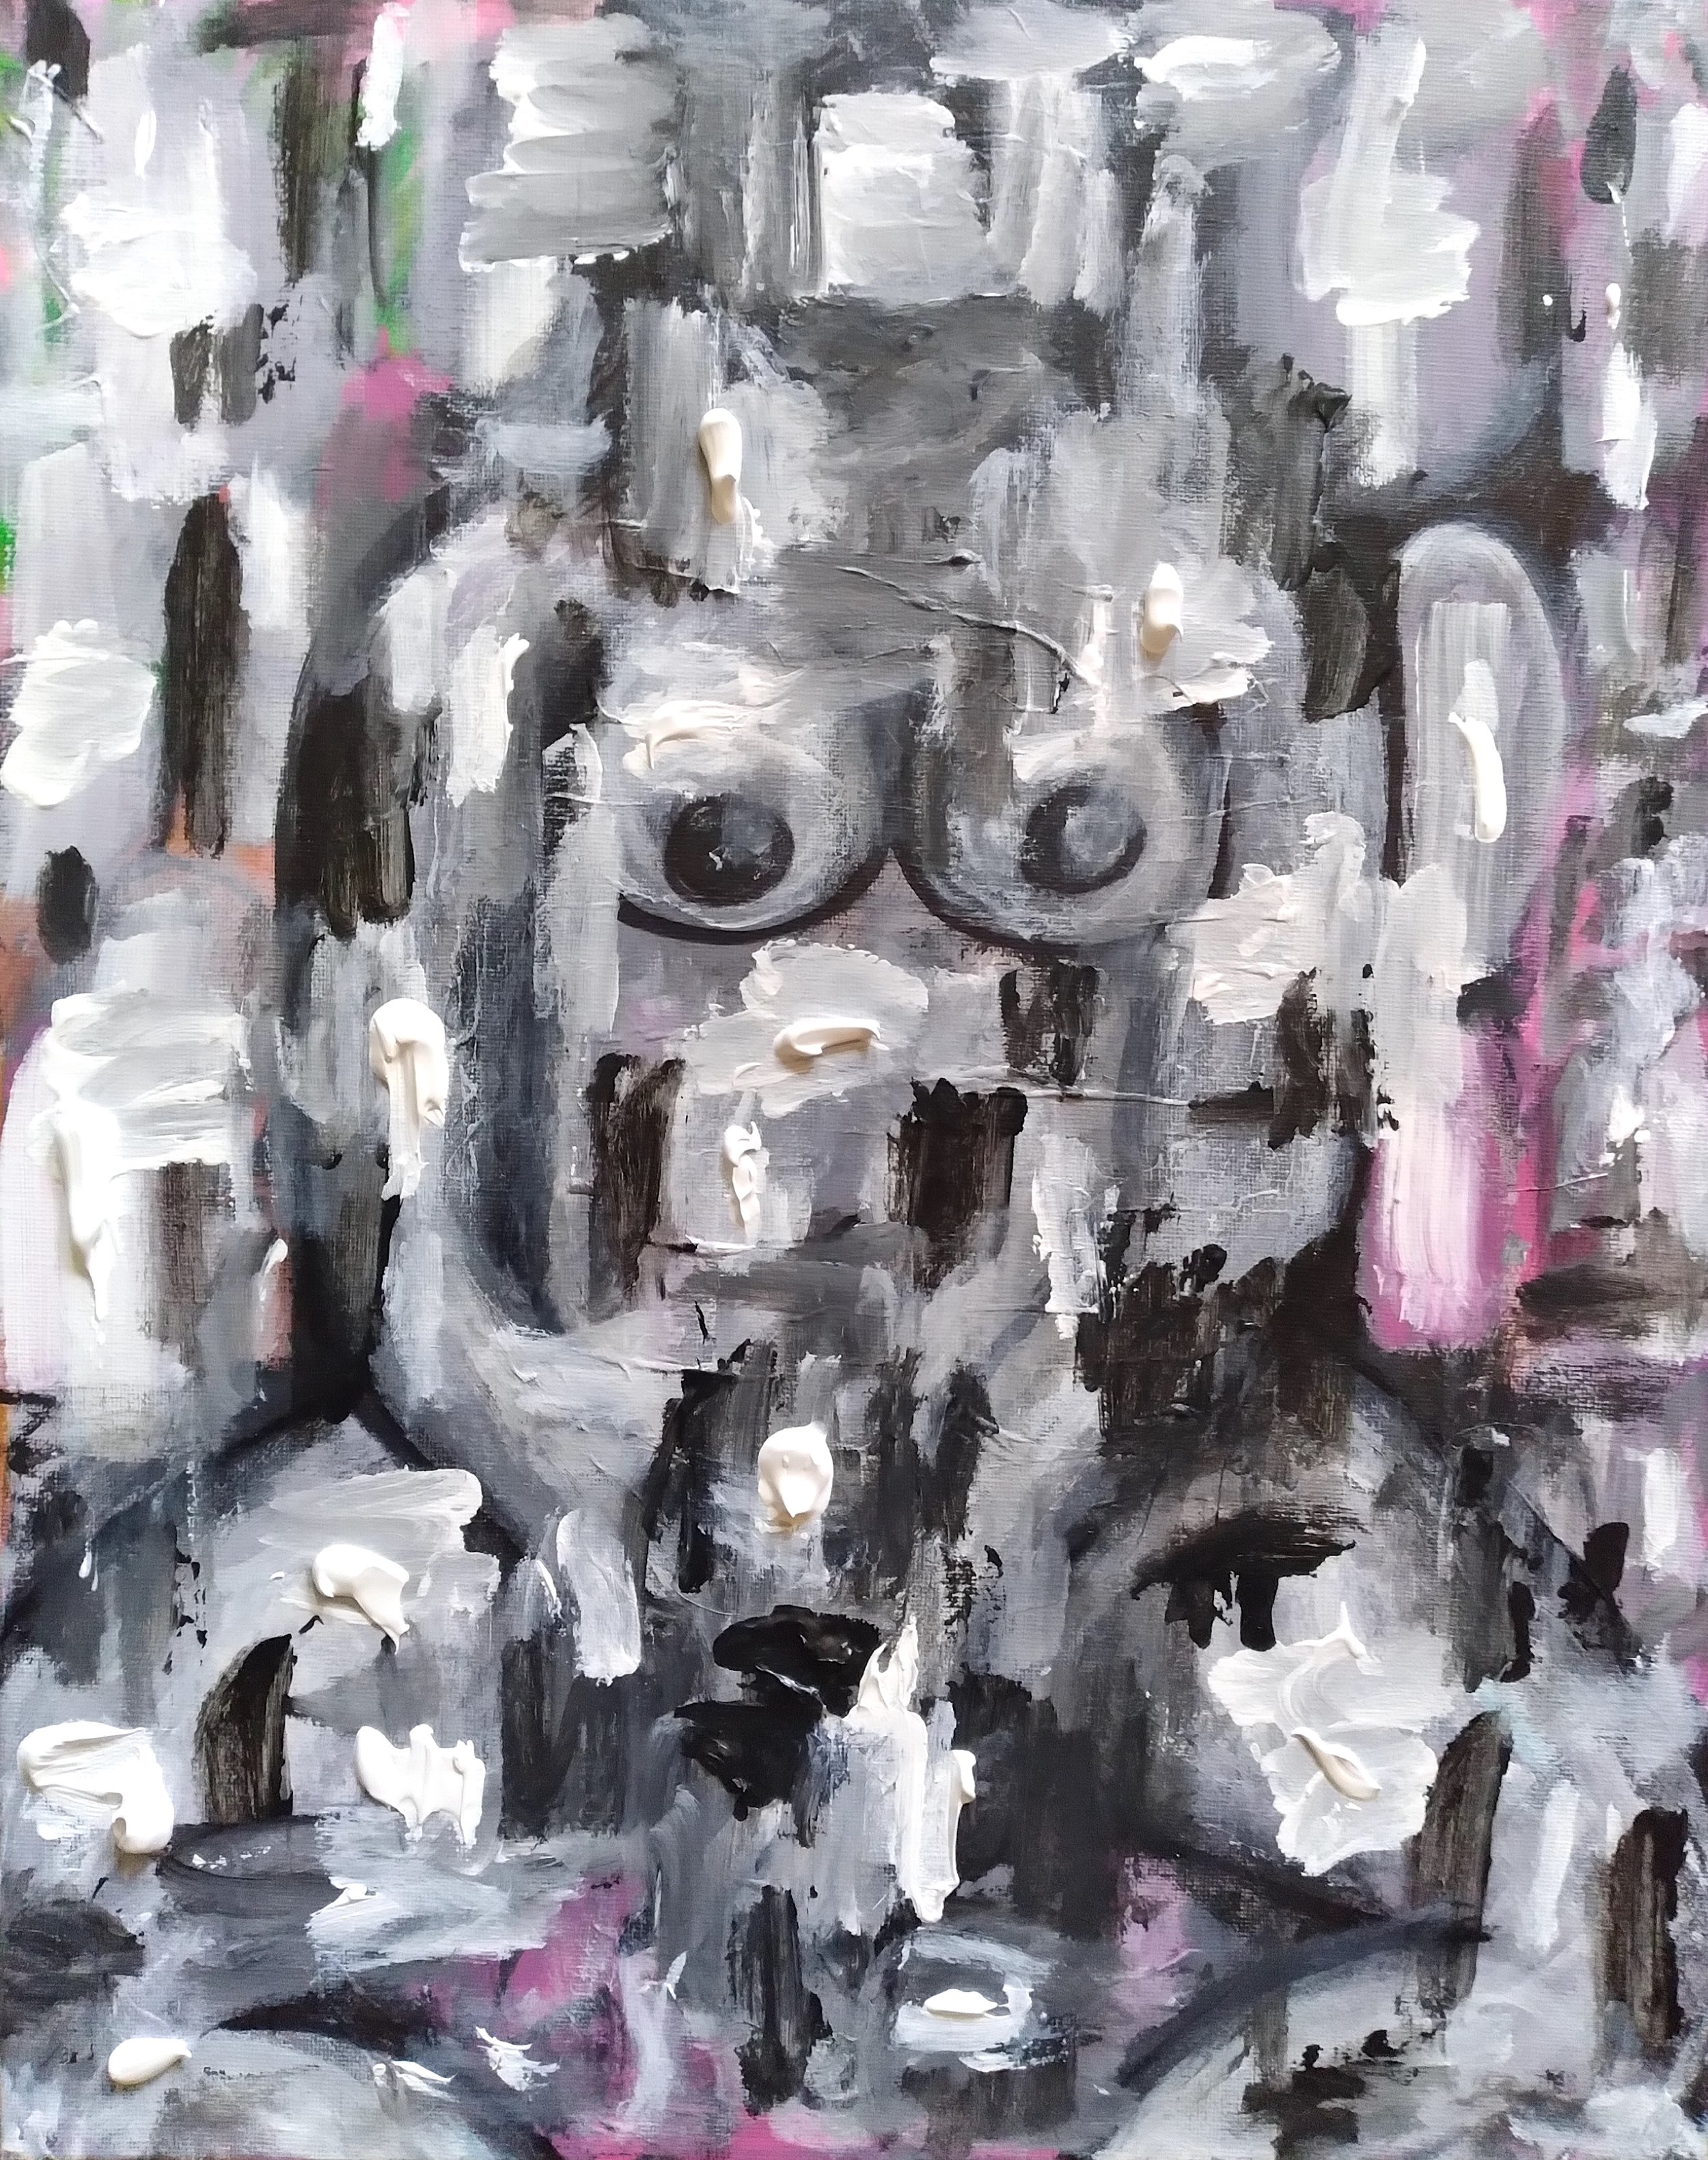 Fifty Shades of Grey, 2020. Oil, acrylic on canvas. 20” x 16”.